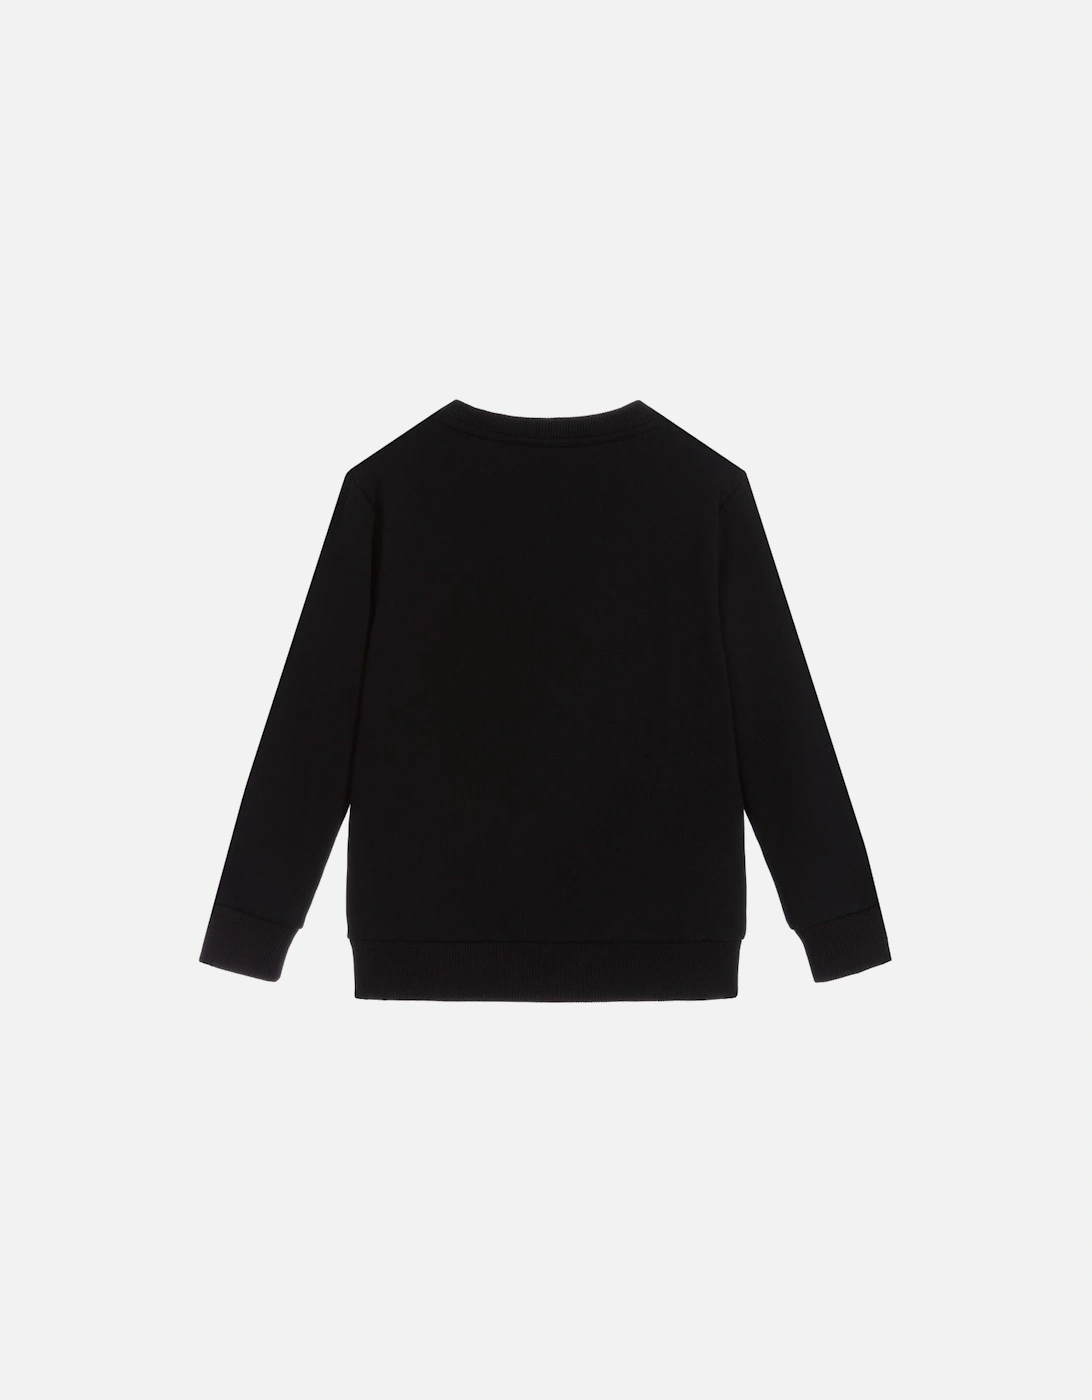 Paris Boys Sweater Black